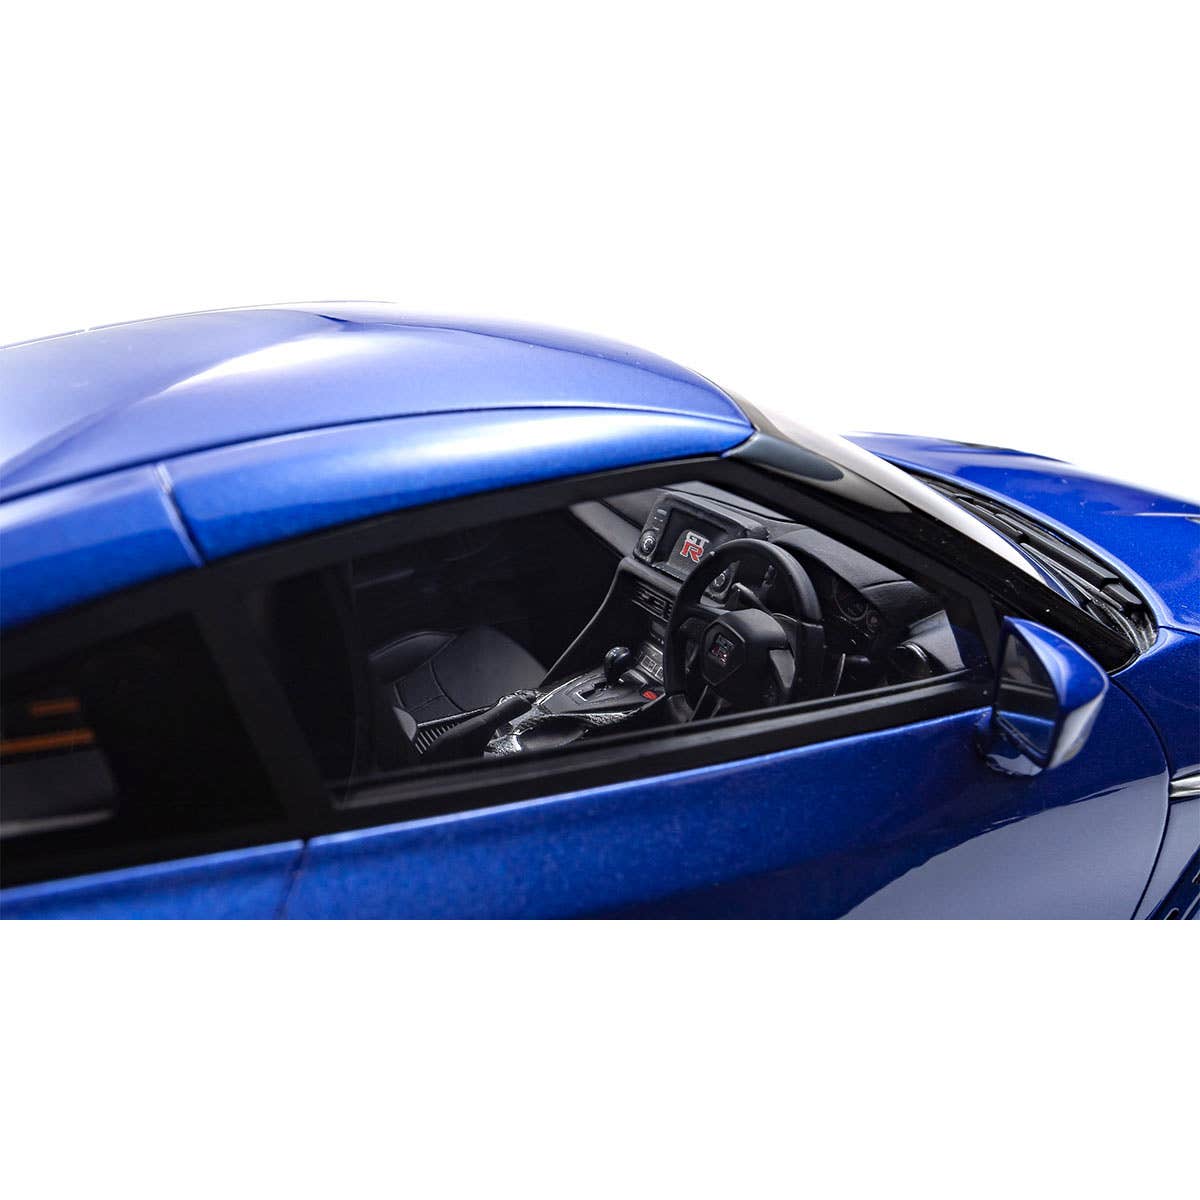 Nissan GT-R  2020 - Blue - 1:18 Scale Resin Model Car